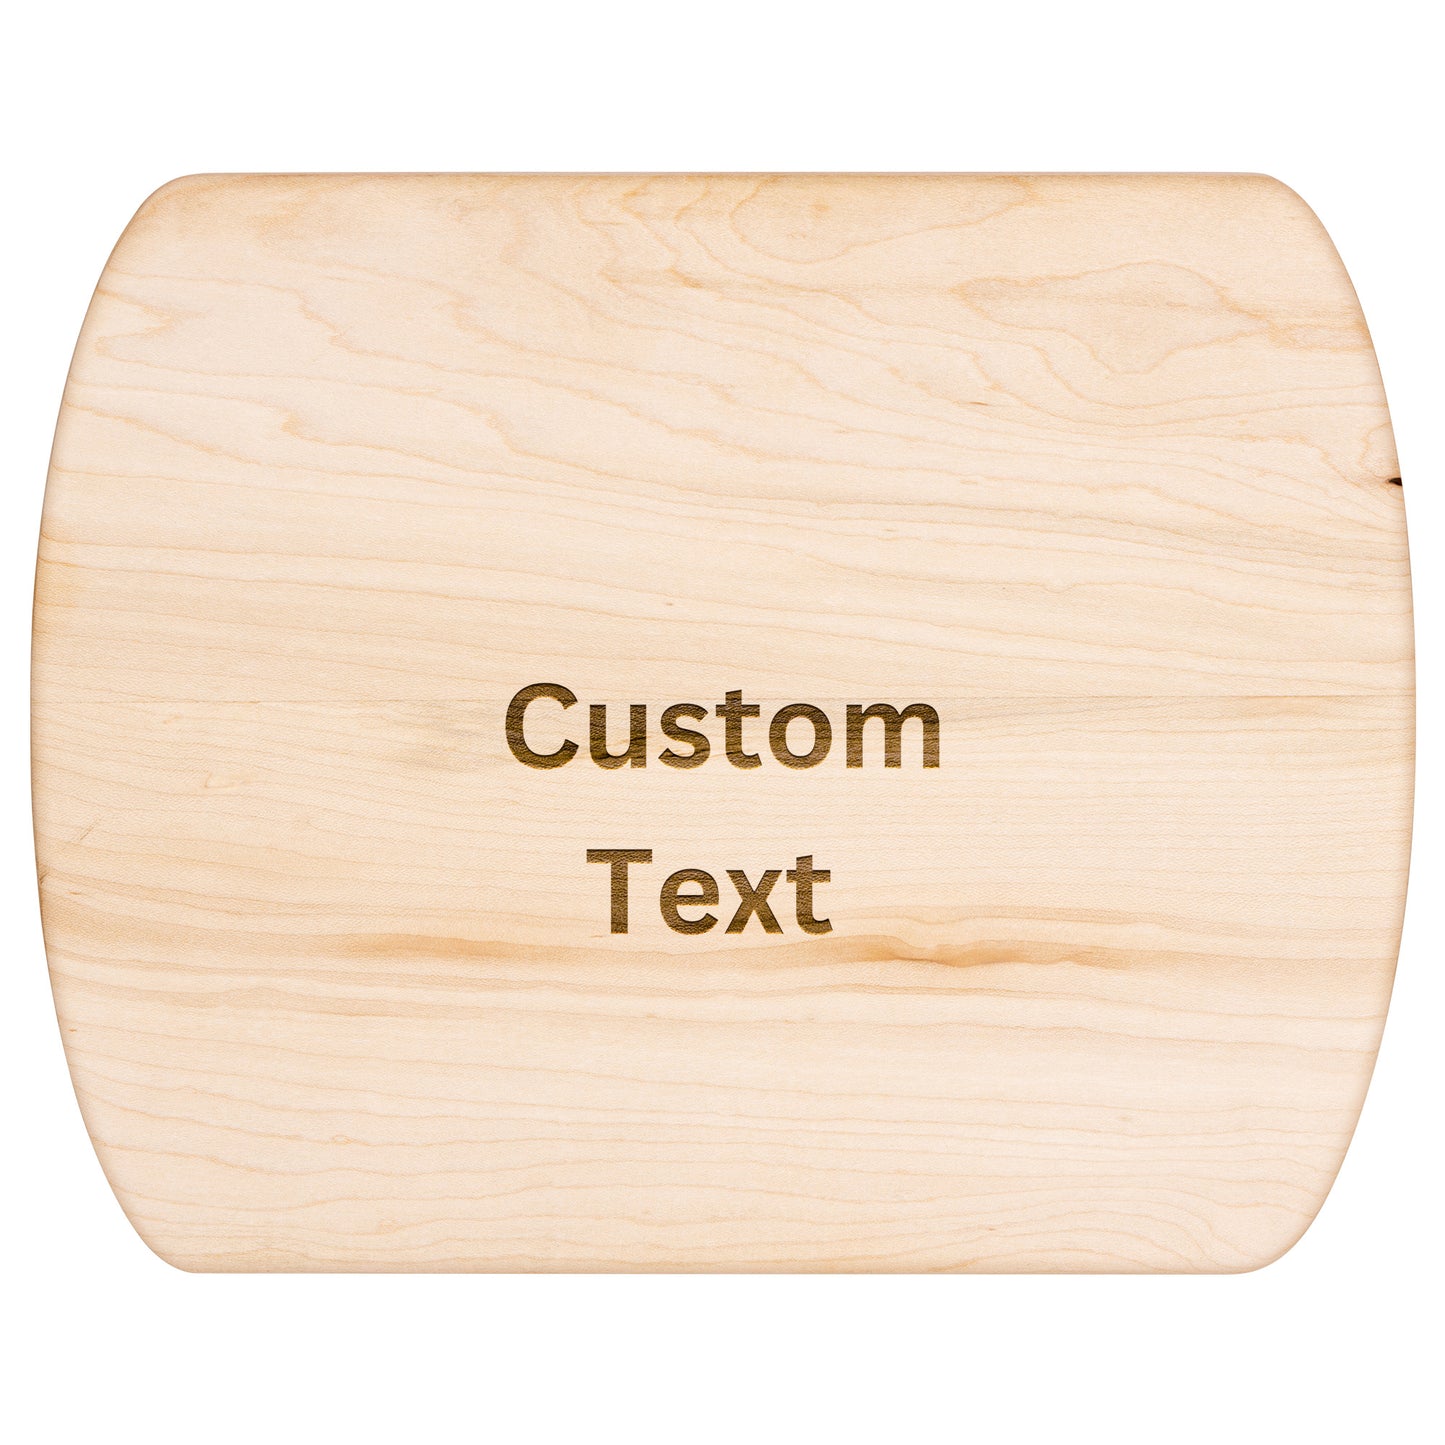 Custom Design or Text